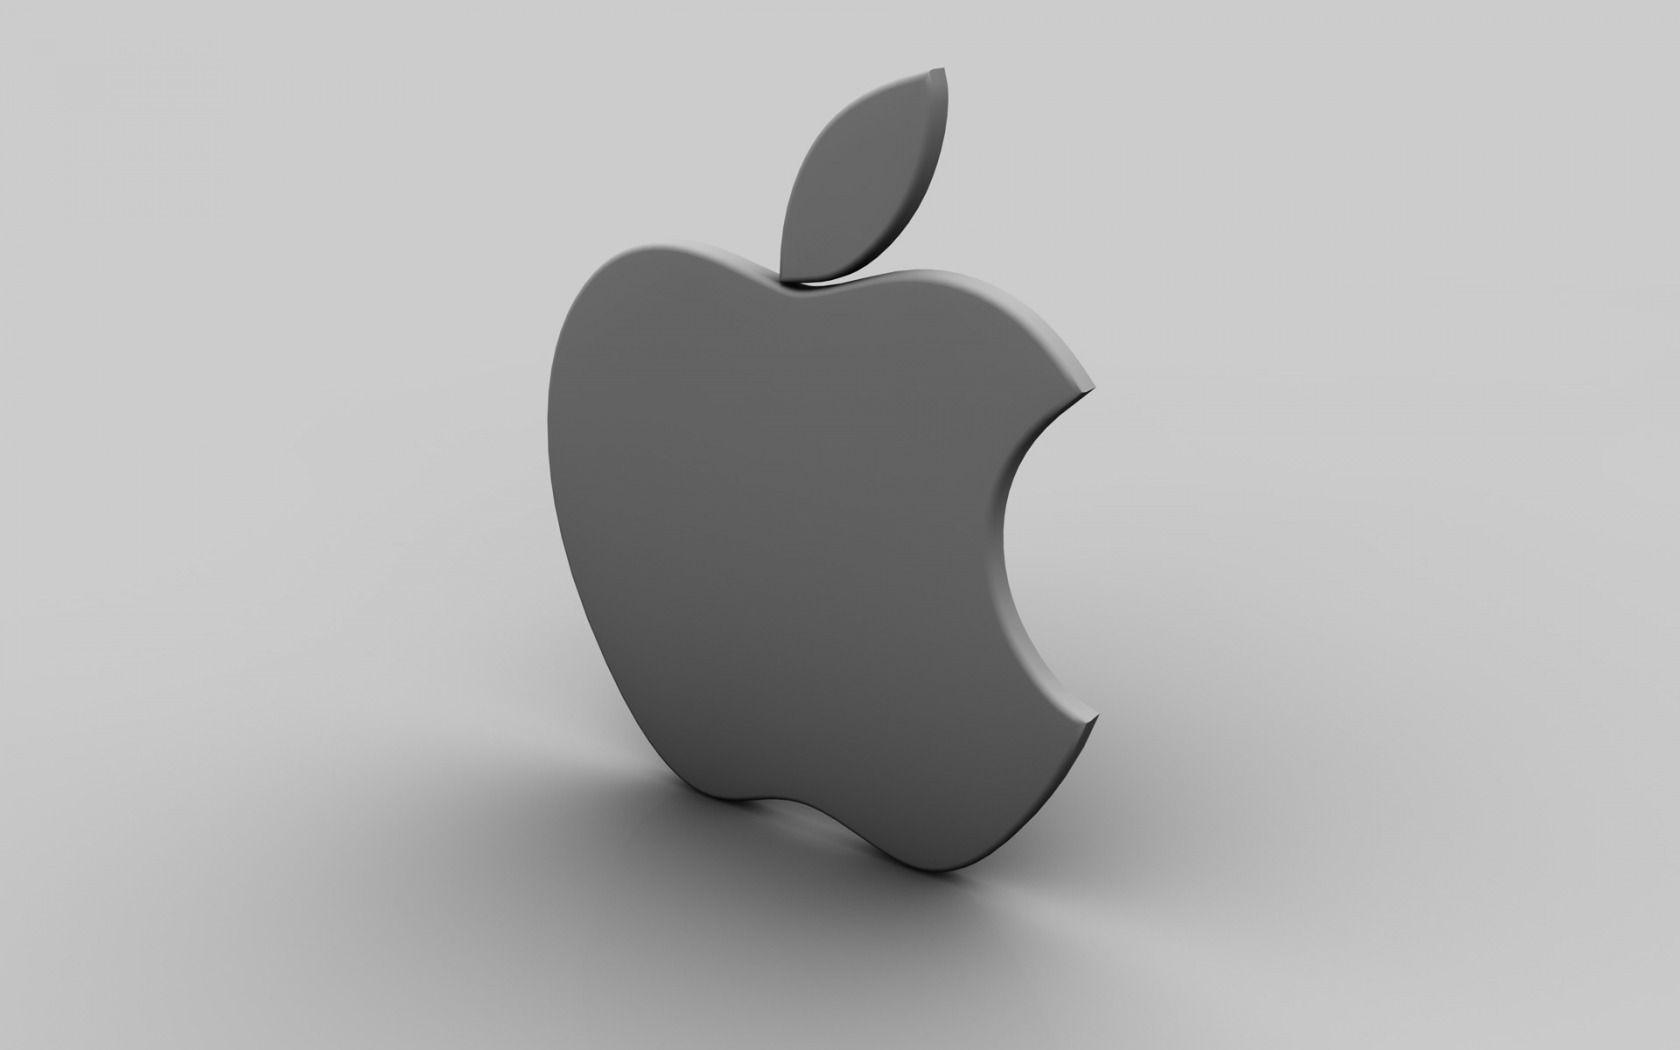 apple 3D wallpaper desktop